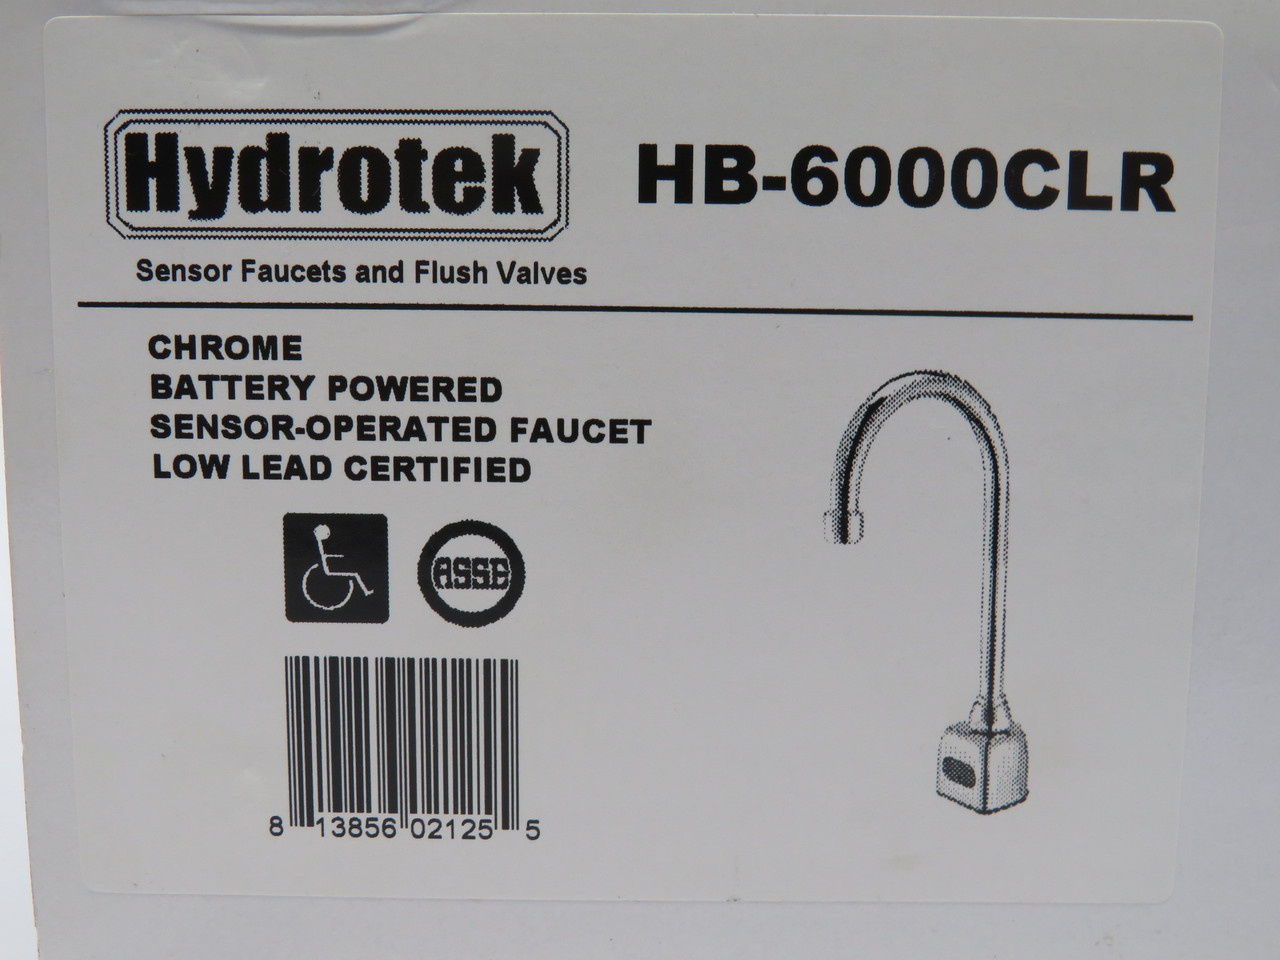 Hydrotek HB-6000CLR Battery-Powered Sensor-Operated Chrome Gooseneck Faucet NEW